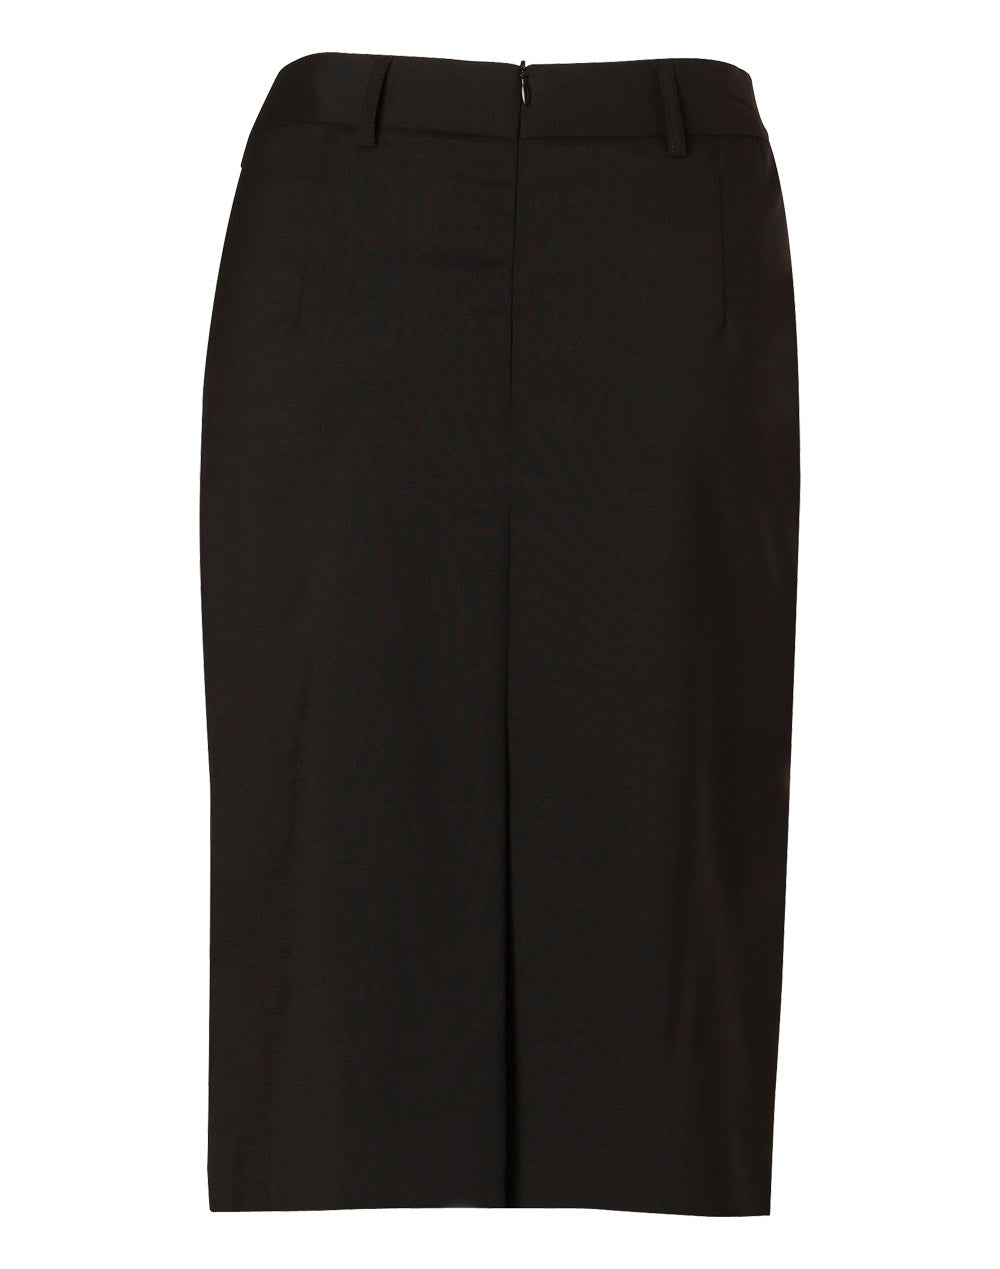 black lined pencil skirt